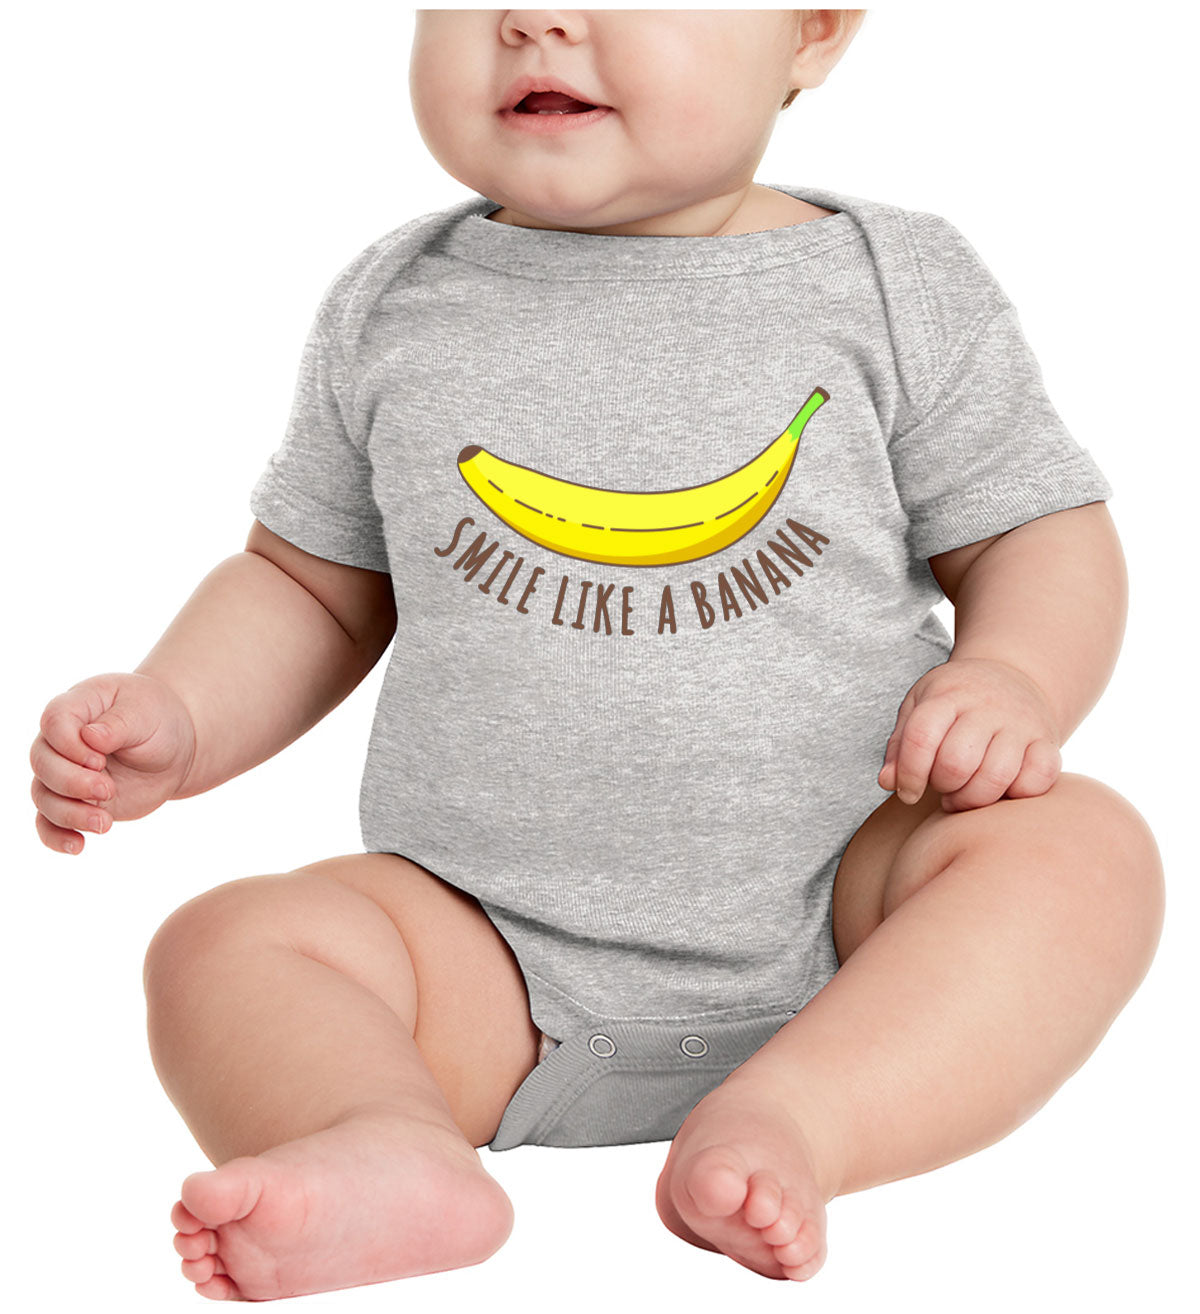 Smile Like A Banana Baby Onesie